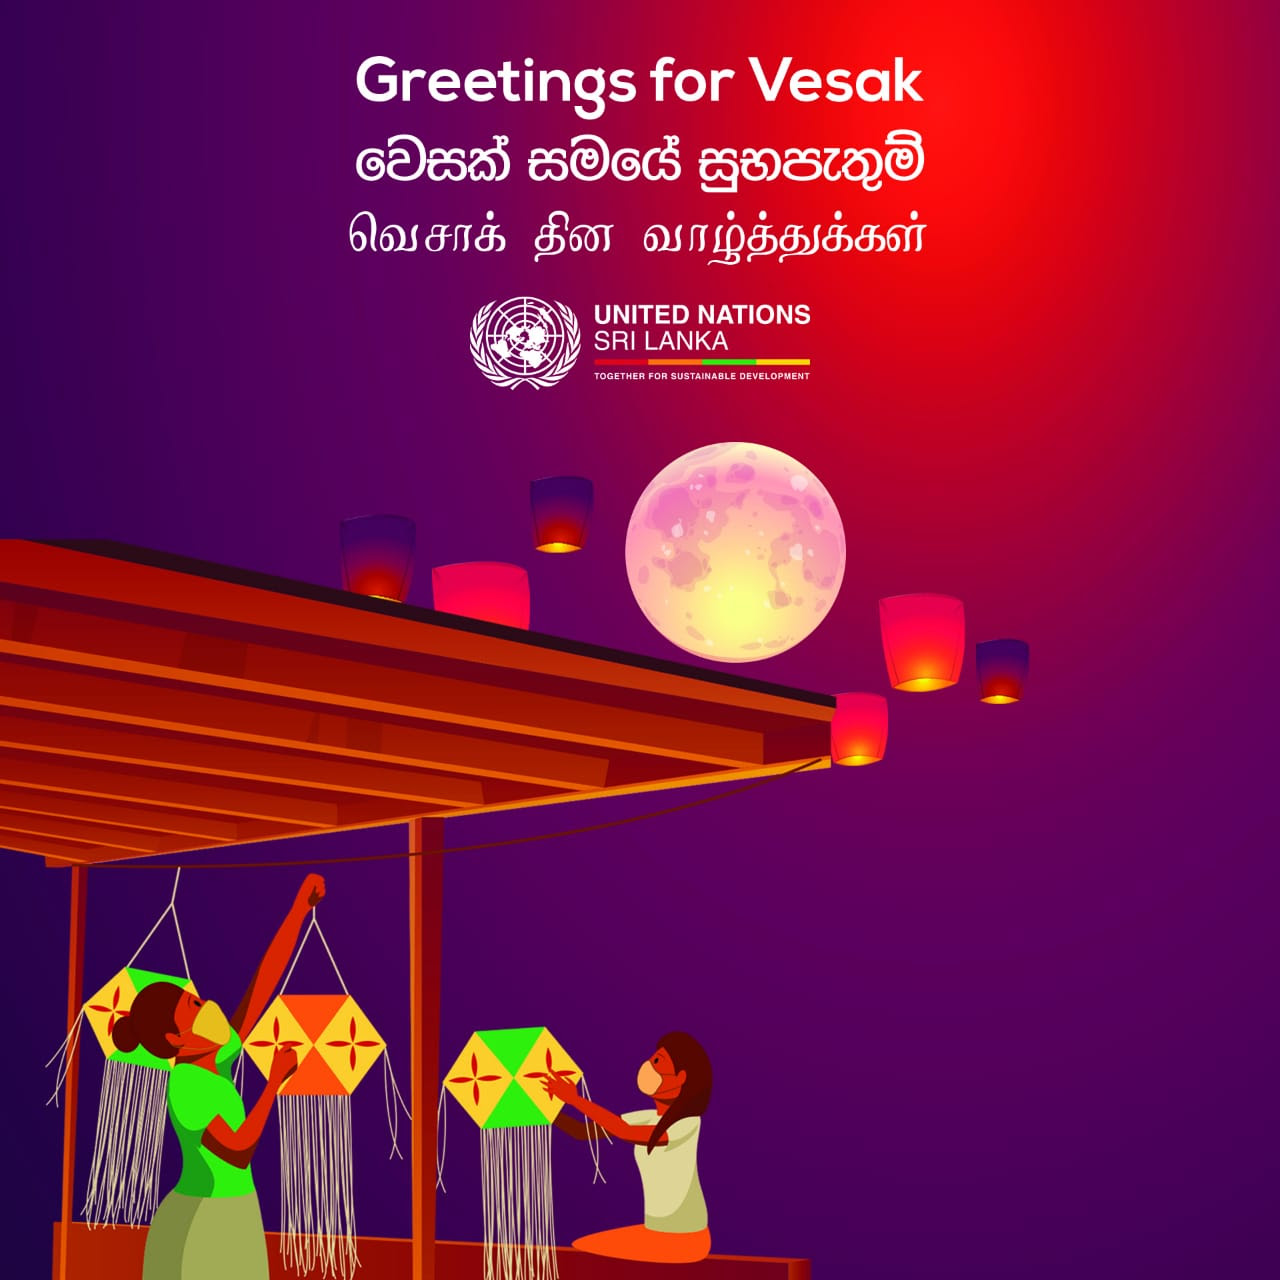 UN Sri Lanka Commemorates the International Day of Vesak 2021